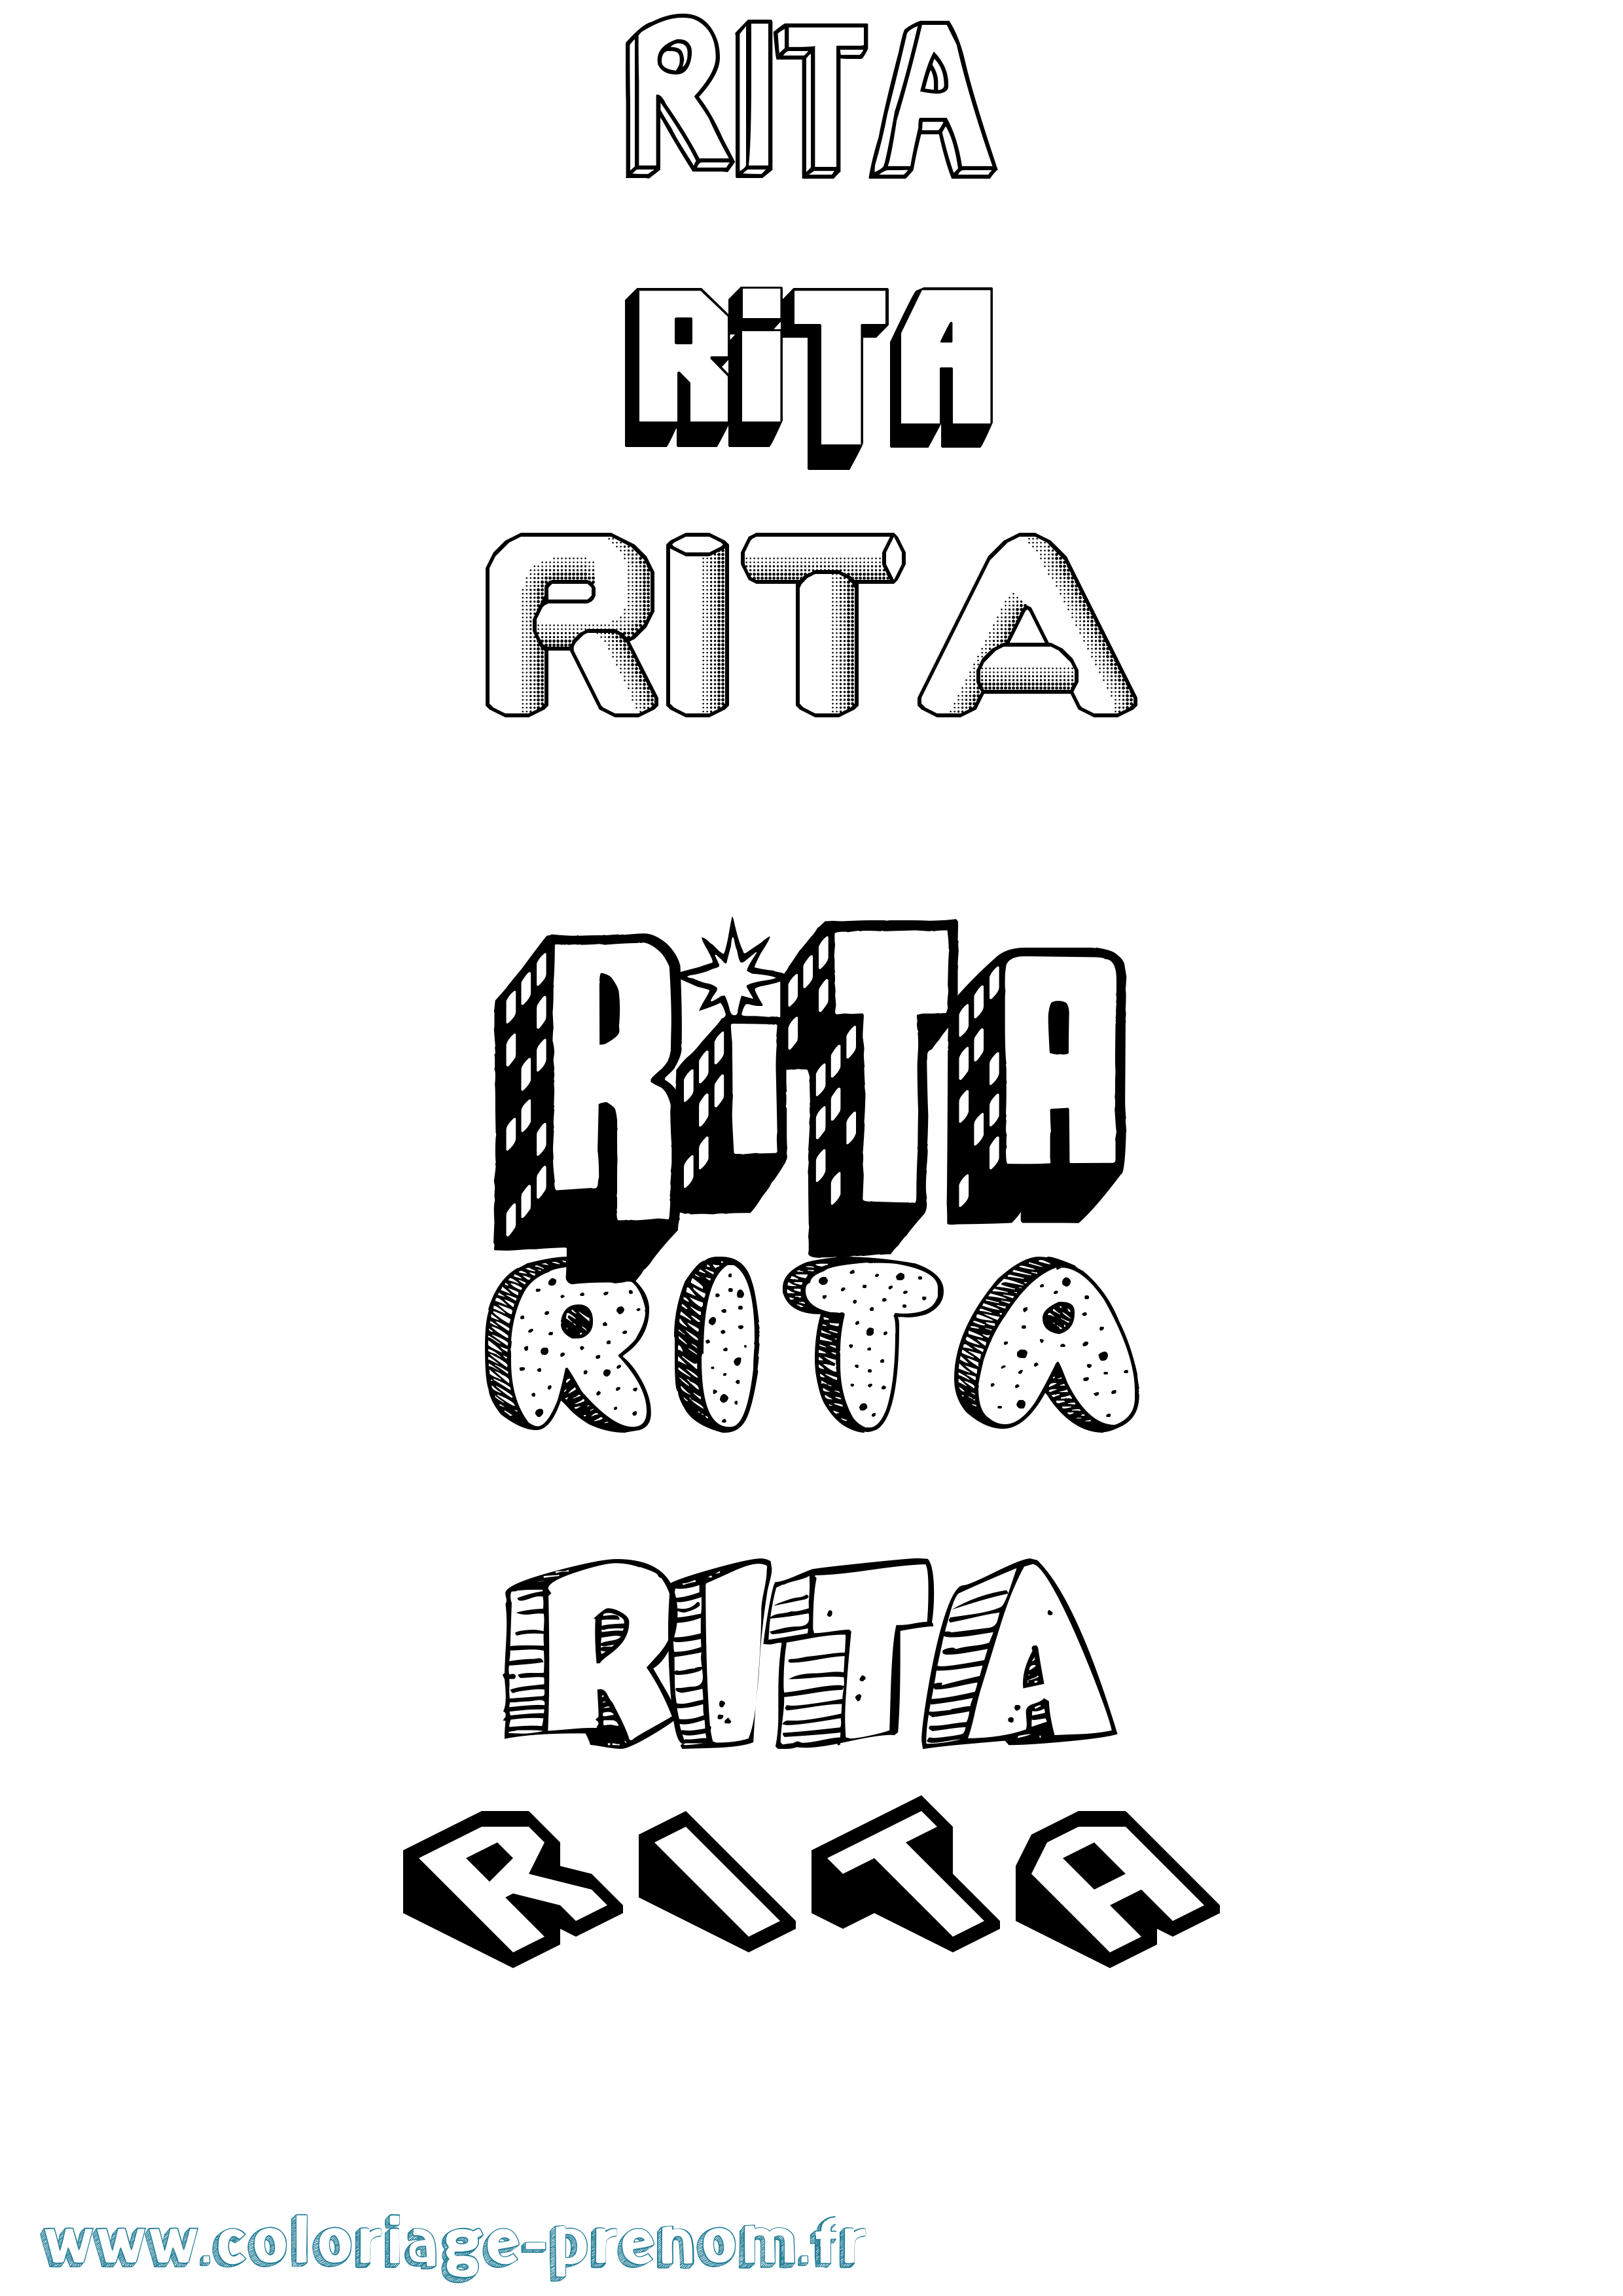 Coloriage prénom Rita